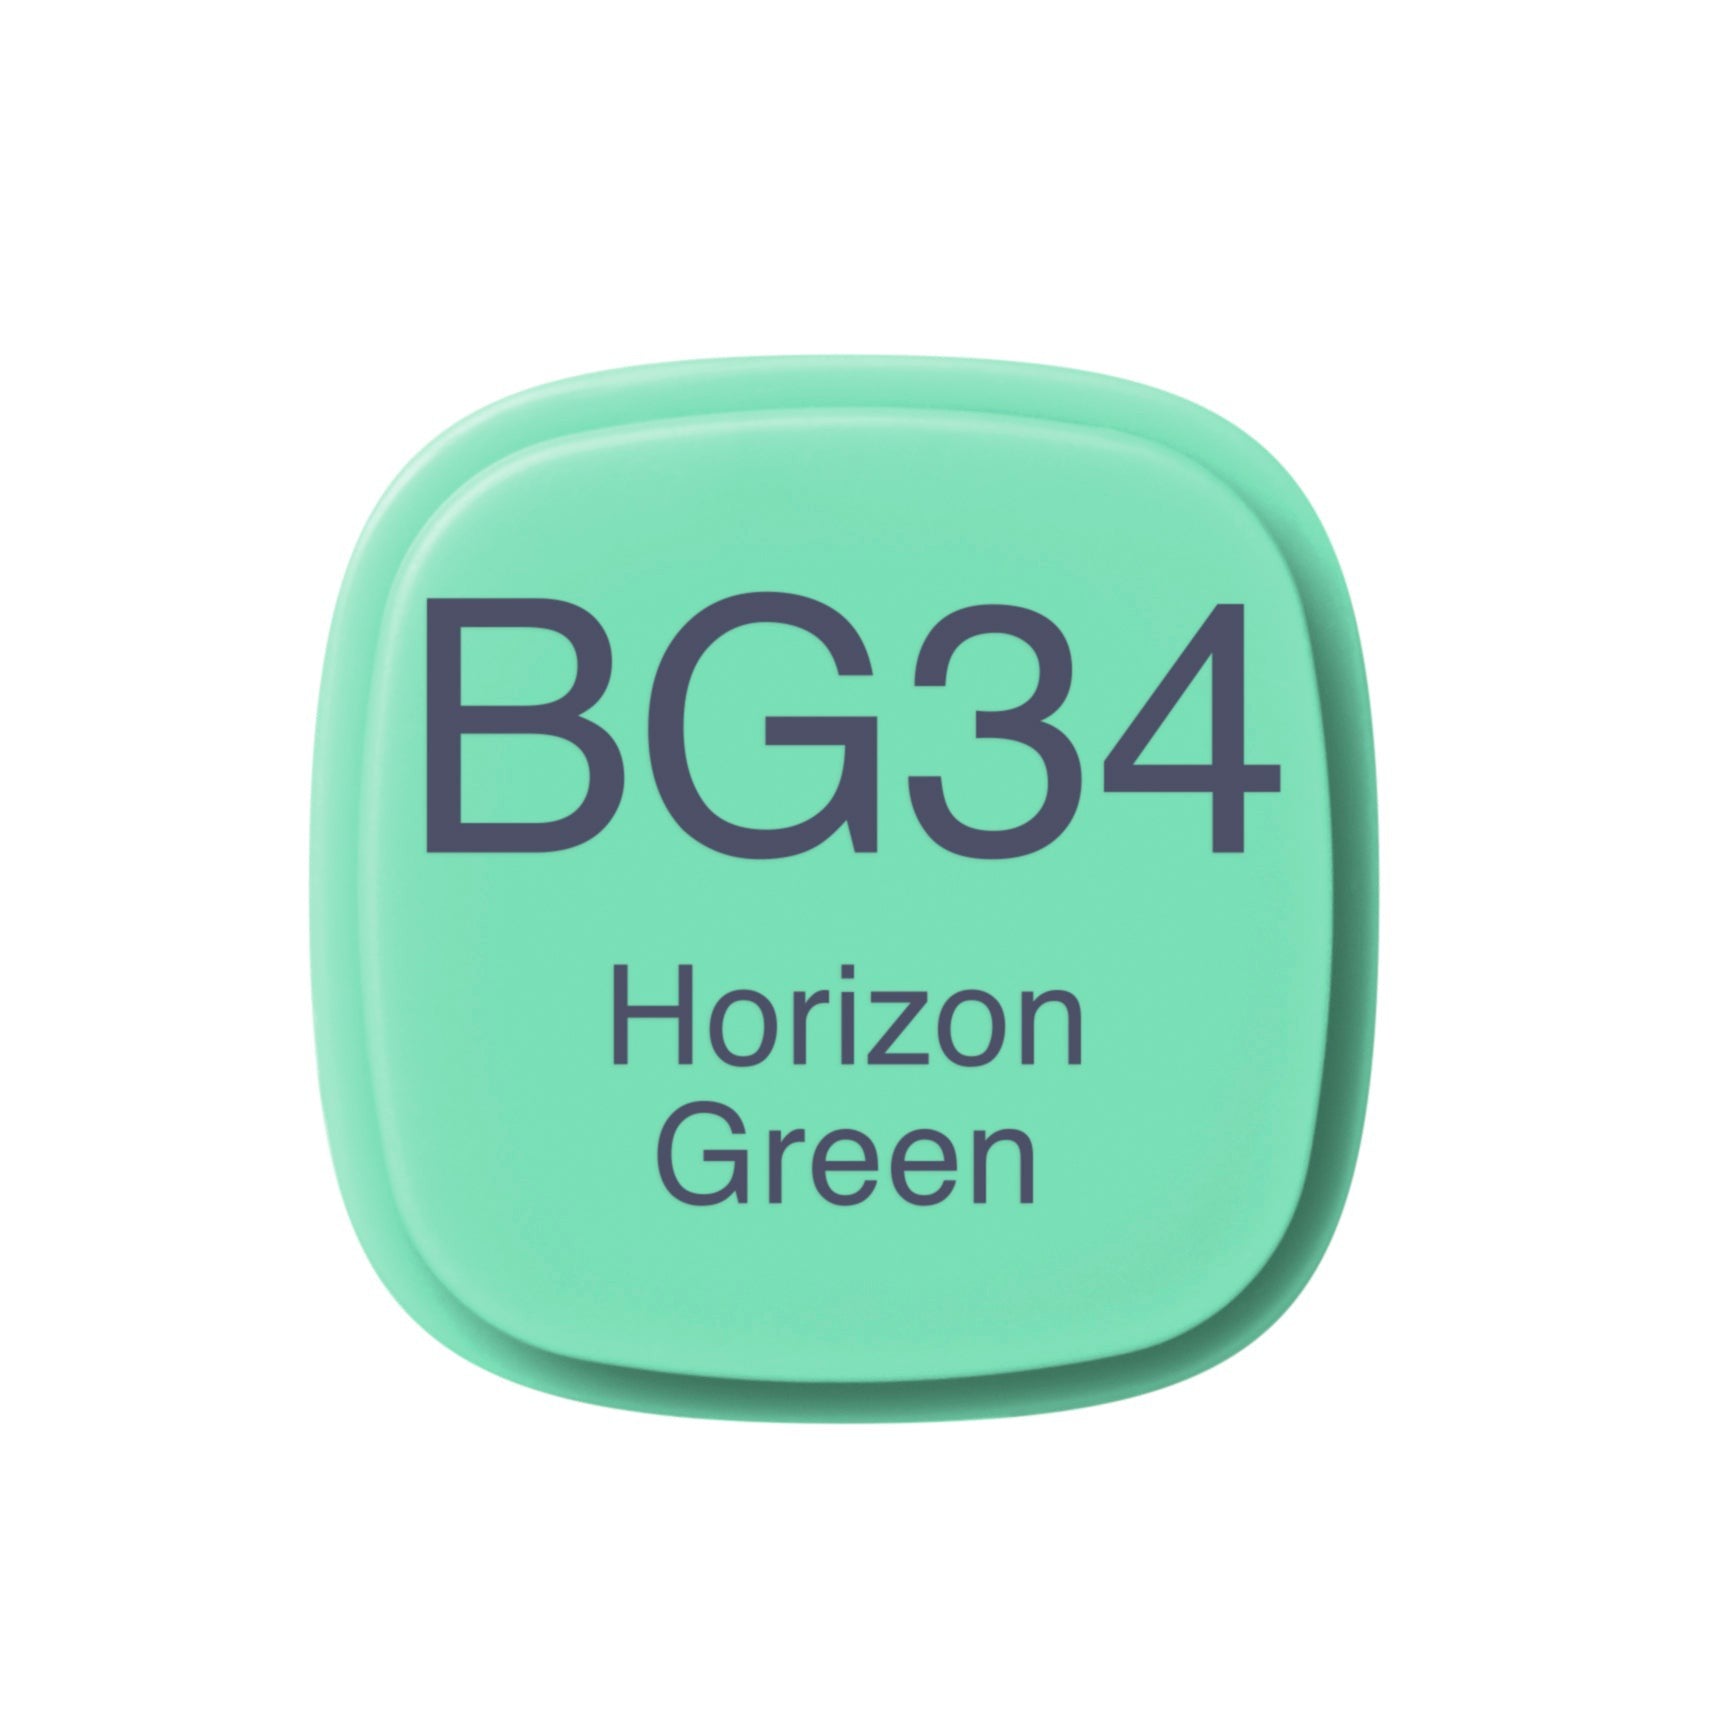 Copic - Original Marker - Horizon Green - BG34-ScrapbookPal